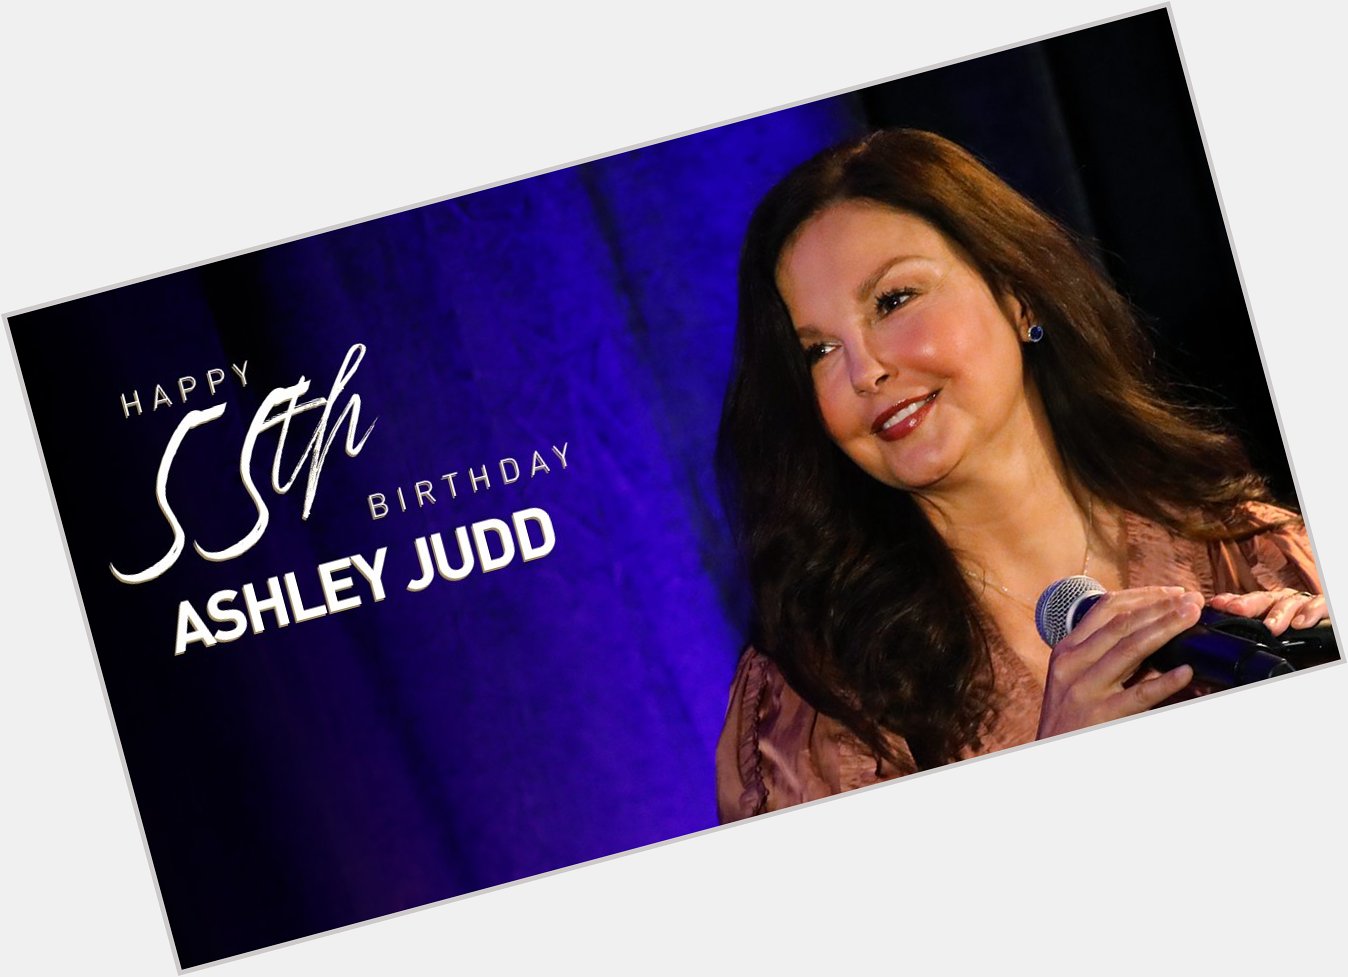 Happy 55th birthday Ashley Judd! 

Read her bio here:  